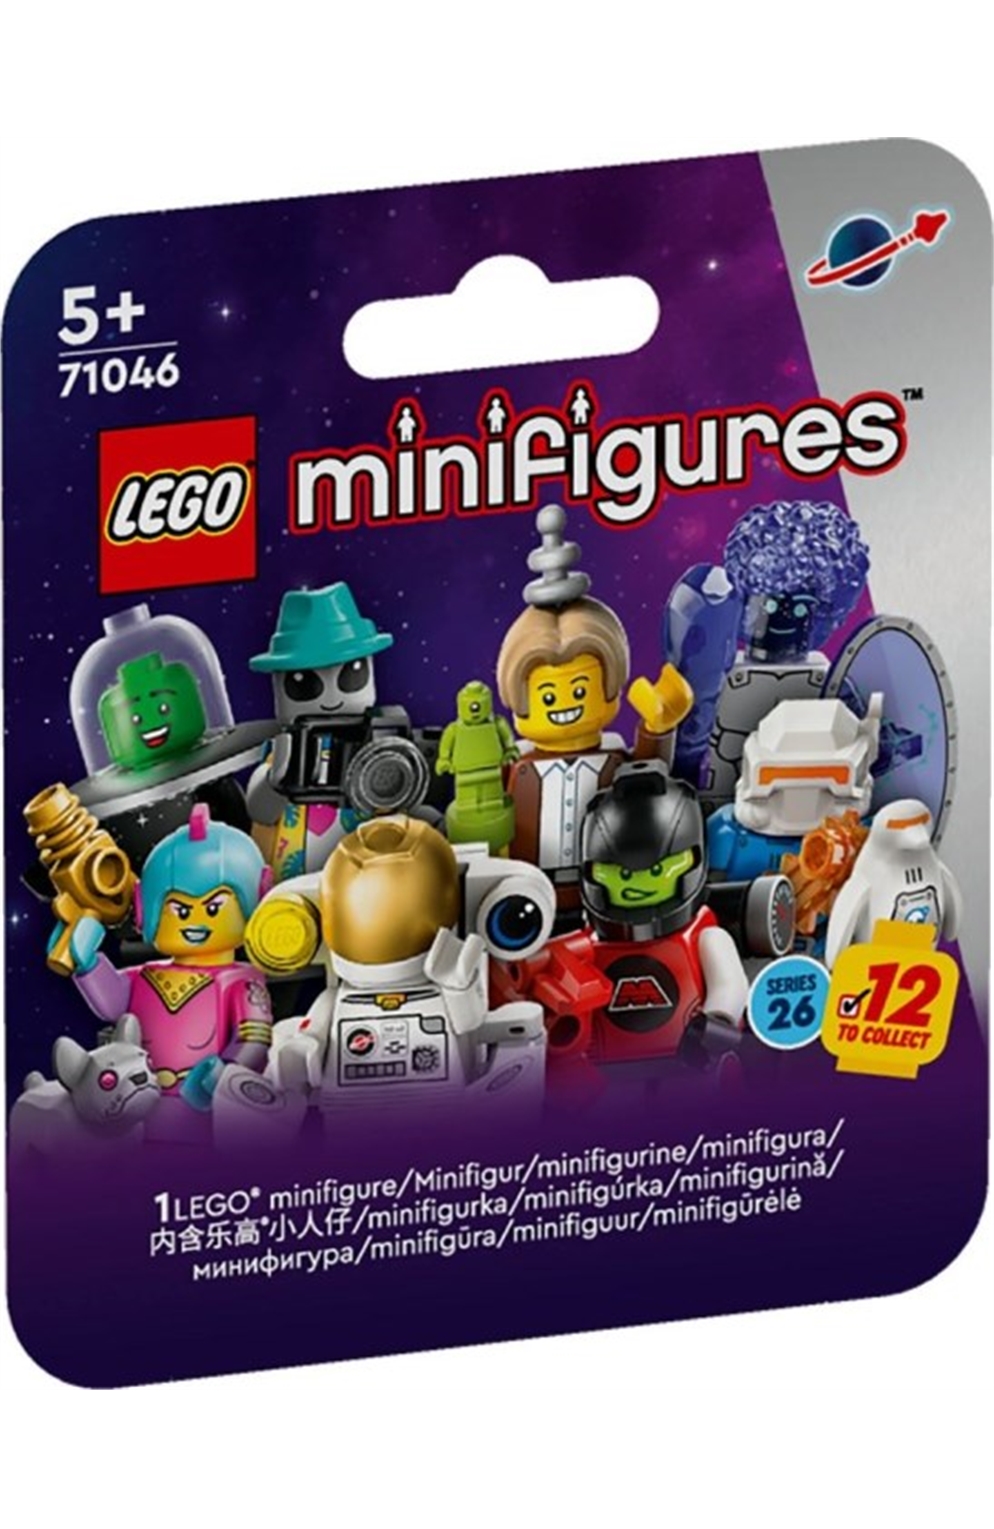 71046 Lego Minifigures Series 26